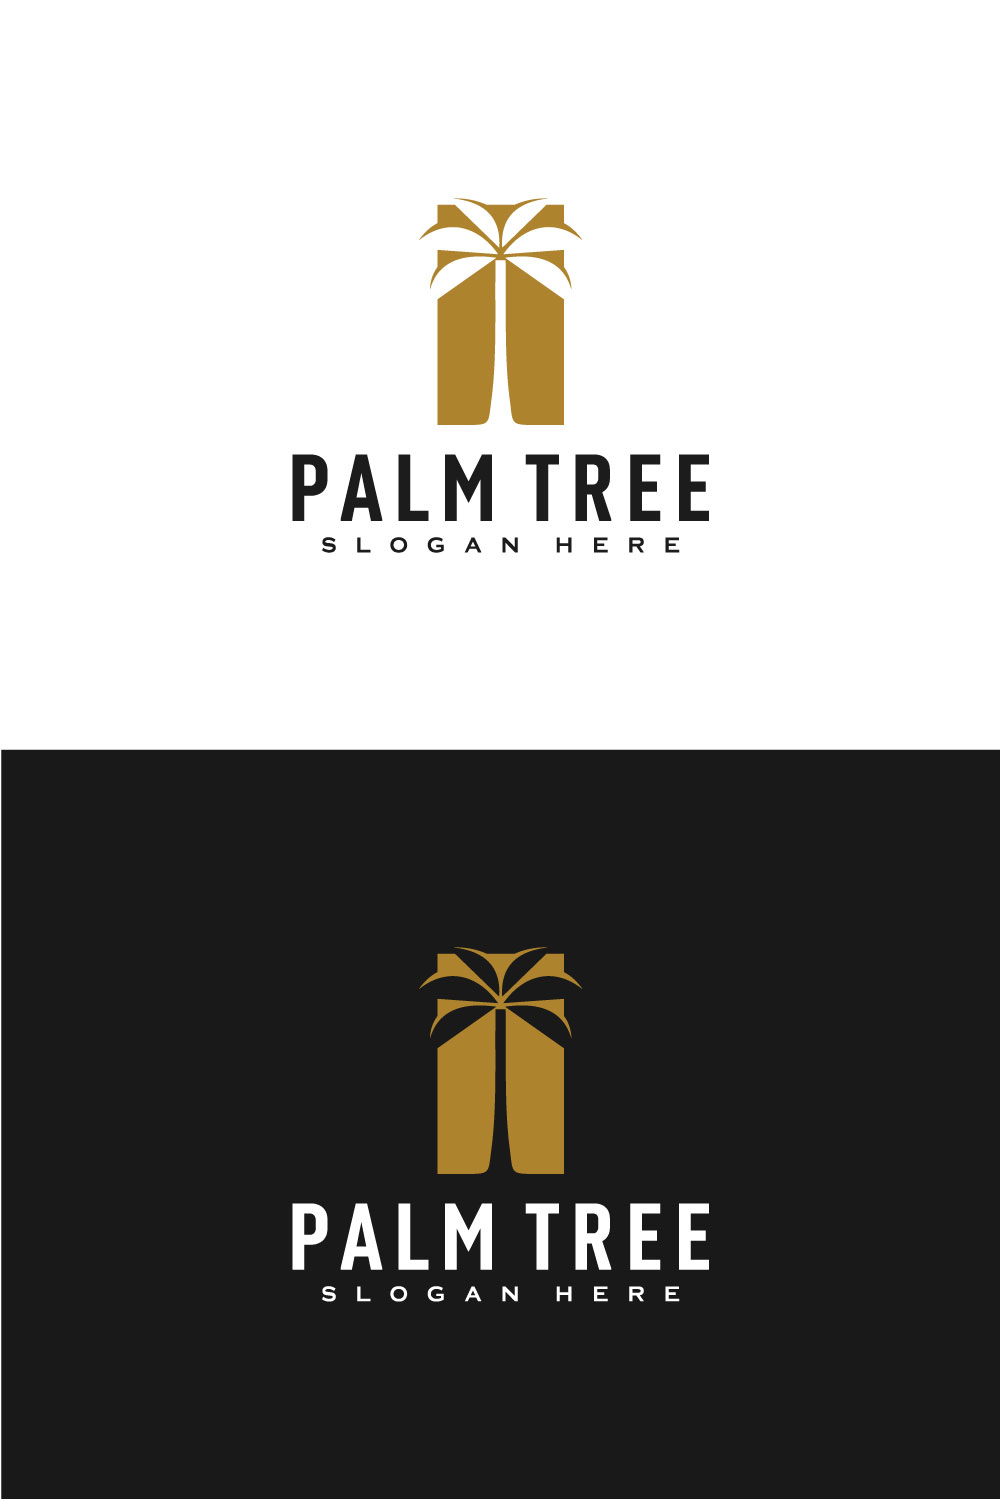 Palm Tree Logo Vector Design Template pinterest image.